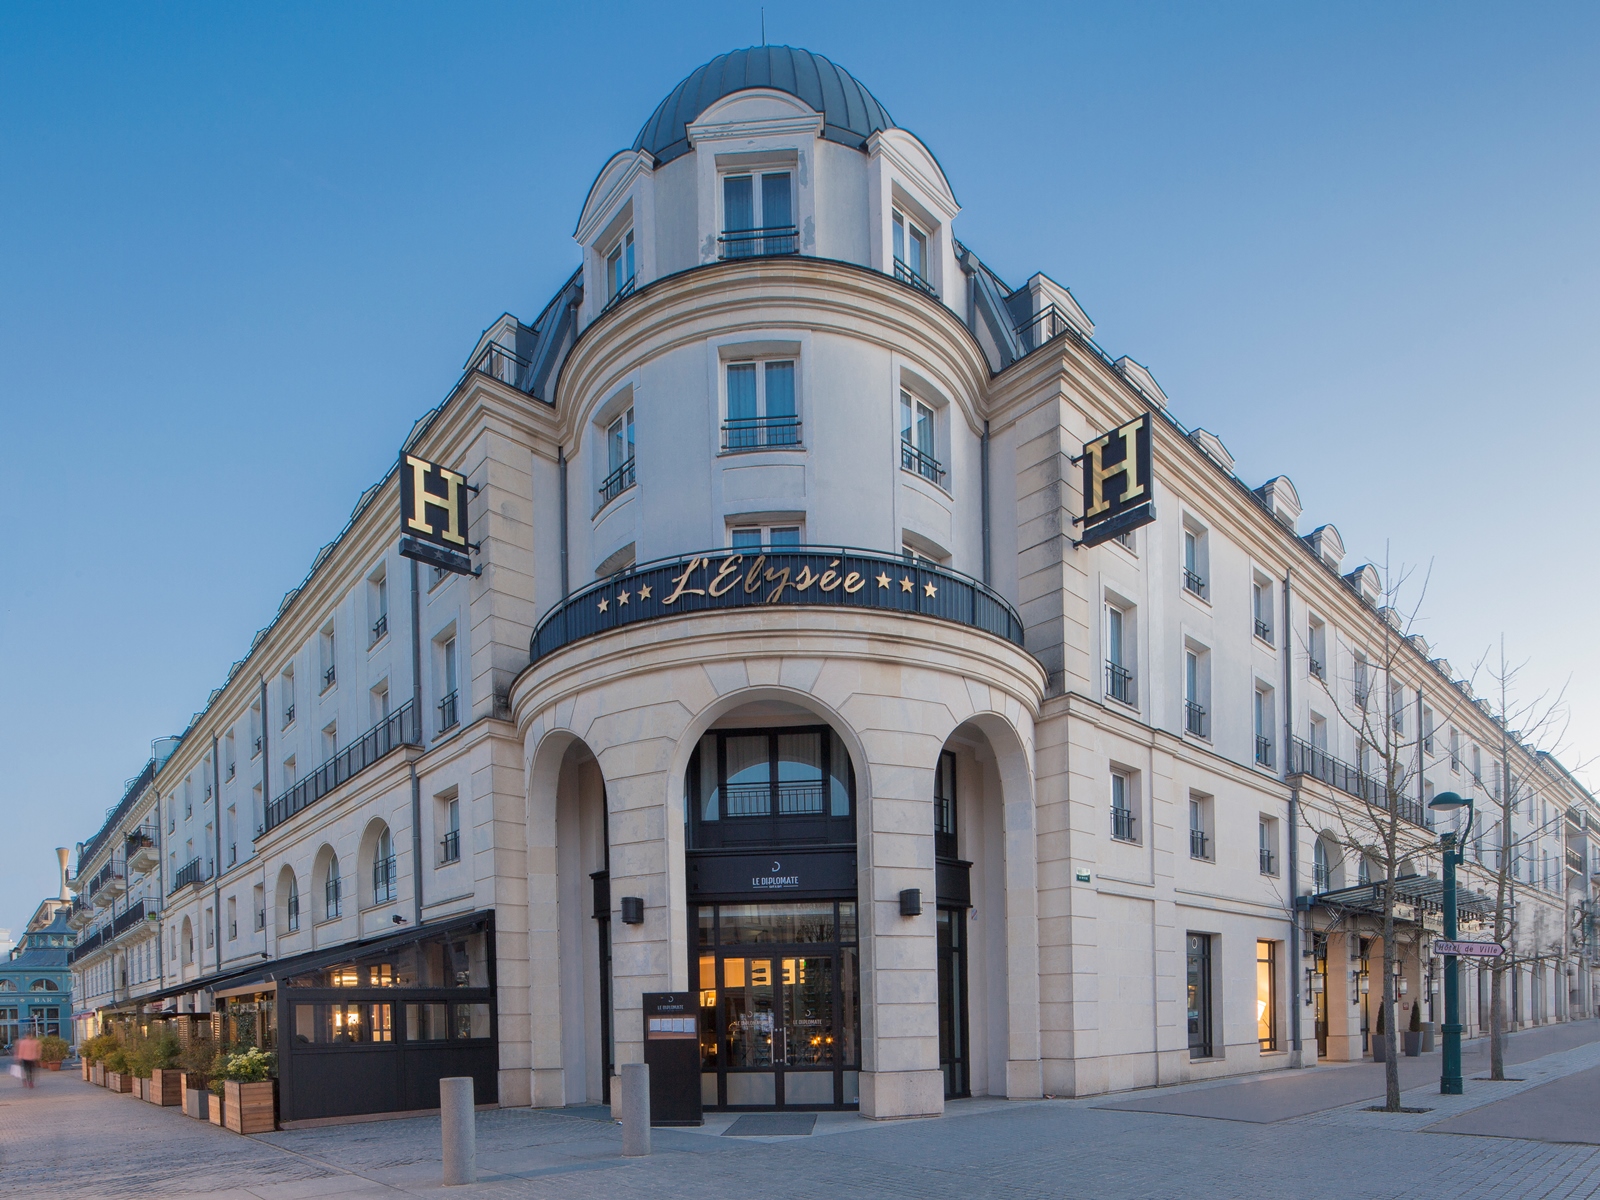 Hotel L'Elysée Val d'Europe <br/>125.00 ew <br/> <a href='http://vakantieoplossing.nl/outpage/?id=d3b13acb7d6cc4cd1171c82b8b1e6774' target='_blank'>View Details</a>